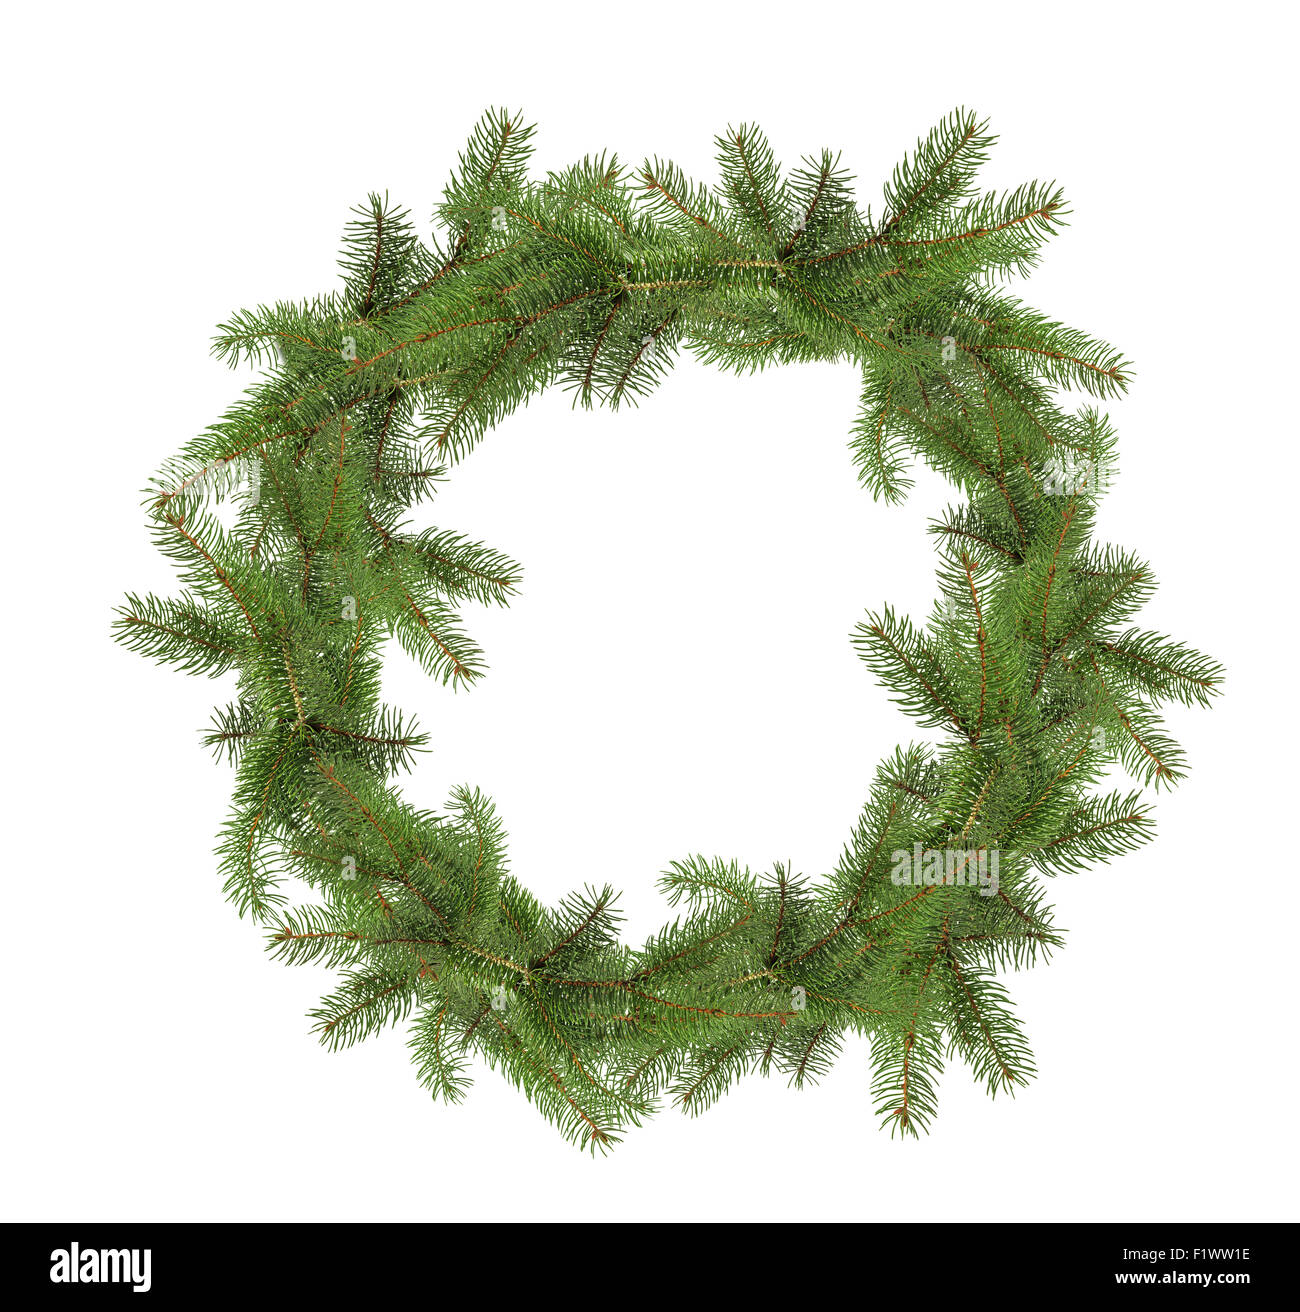 Christmas tree wreath isolated on the white background. Stock Photo